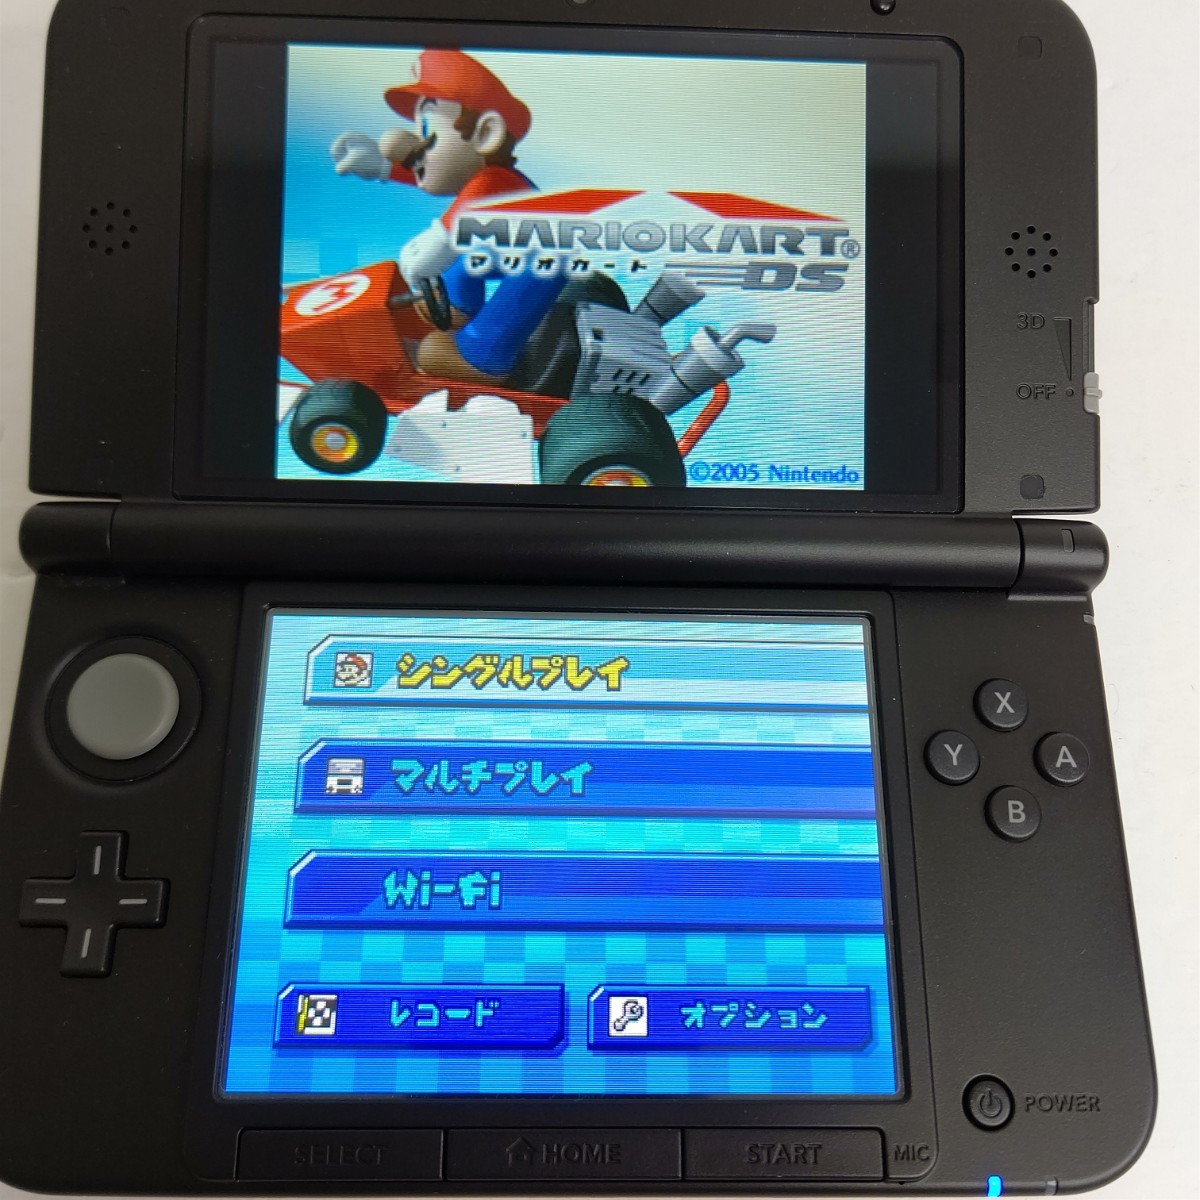 Nintendo ニンテンドー3DSLL レッドブラック 極美品 任天堂ゲーム機